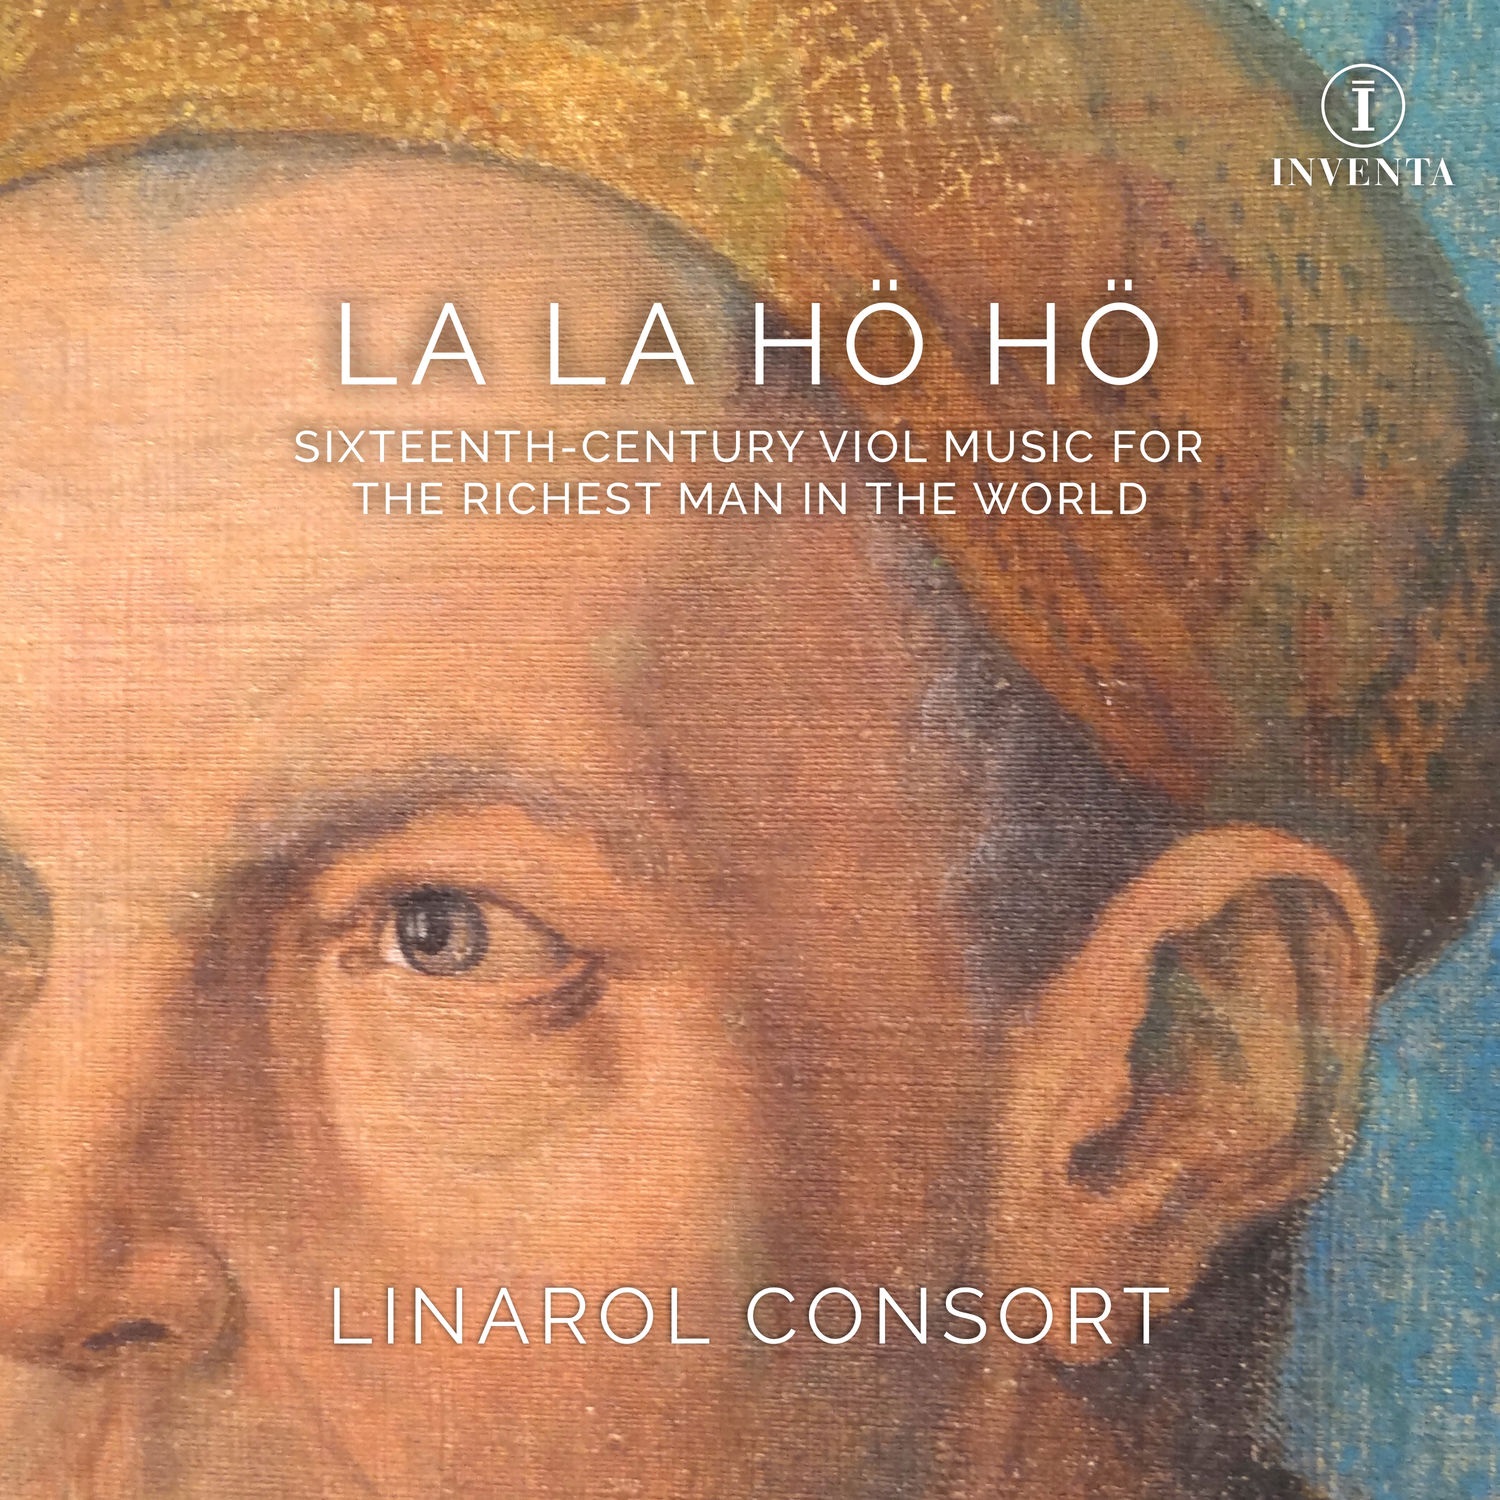 The Linarol Consort – La la ho ho: Sixteenth-Century Viol Music for the Richest Man in the World (2021) [FLAC 24bit/96kHz]